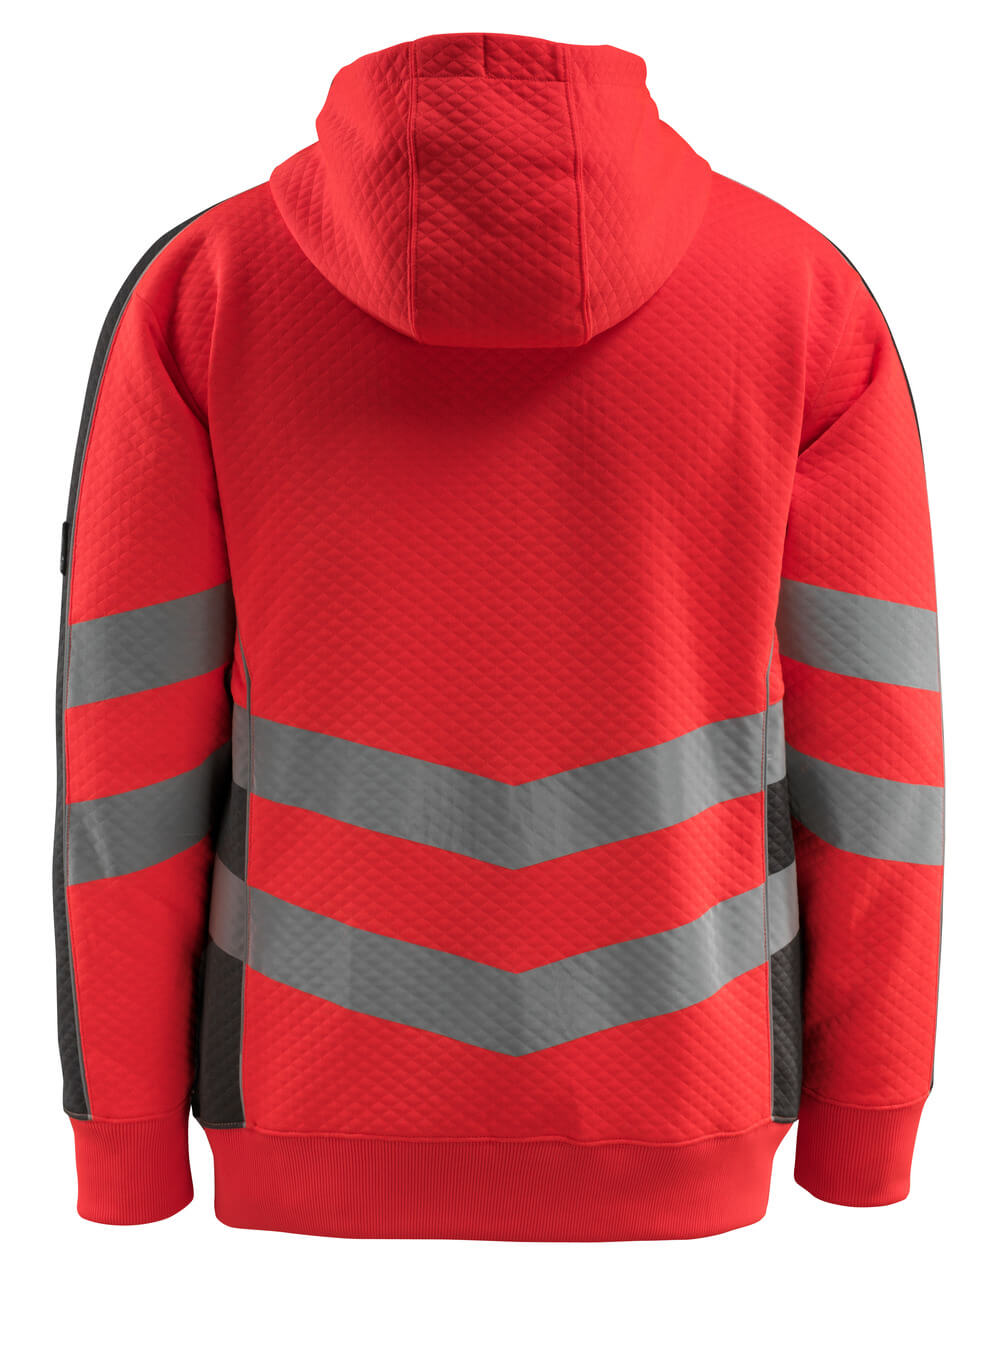 Kapuzensweatshirt mit Rei?verschluss SAFE SUPREME Kapuzensweatshirt mit Rei?verschluss in Farbe Hi-vis Rot/Dunkelanthrazit